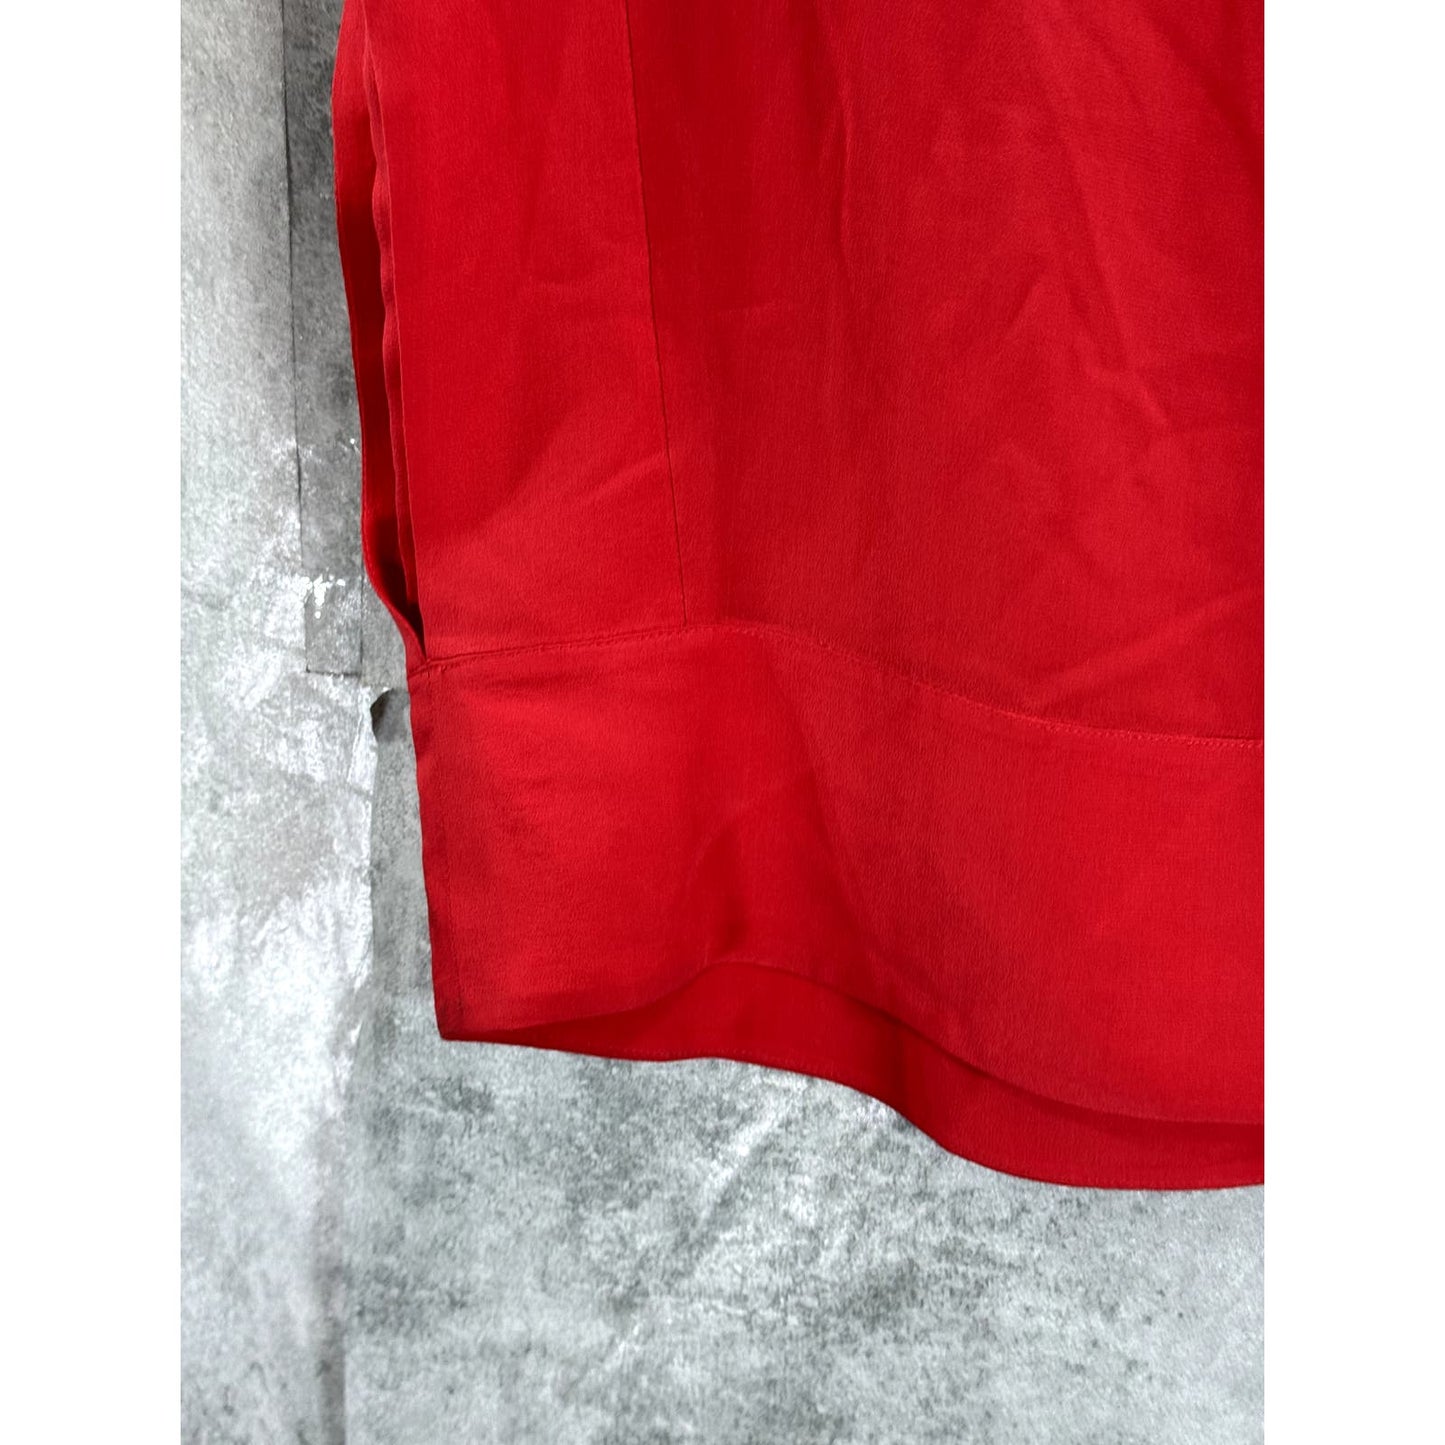 ADOLFO DOMINGUEZ Women's Red Cutout Short Sleeve Boatneck Top SZ 4